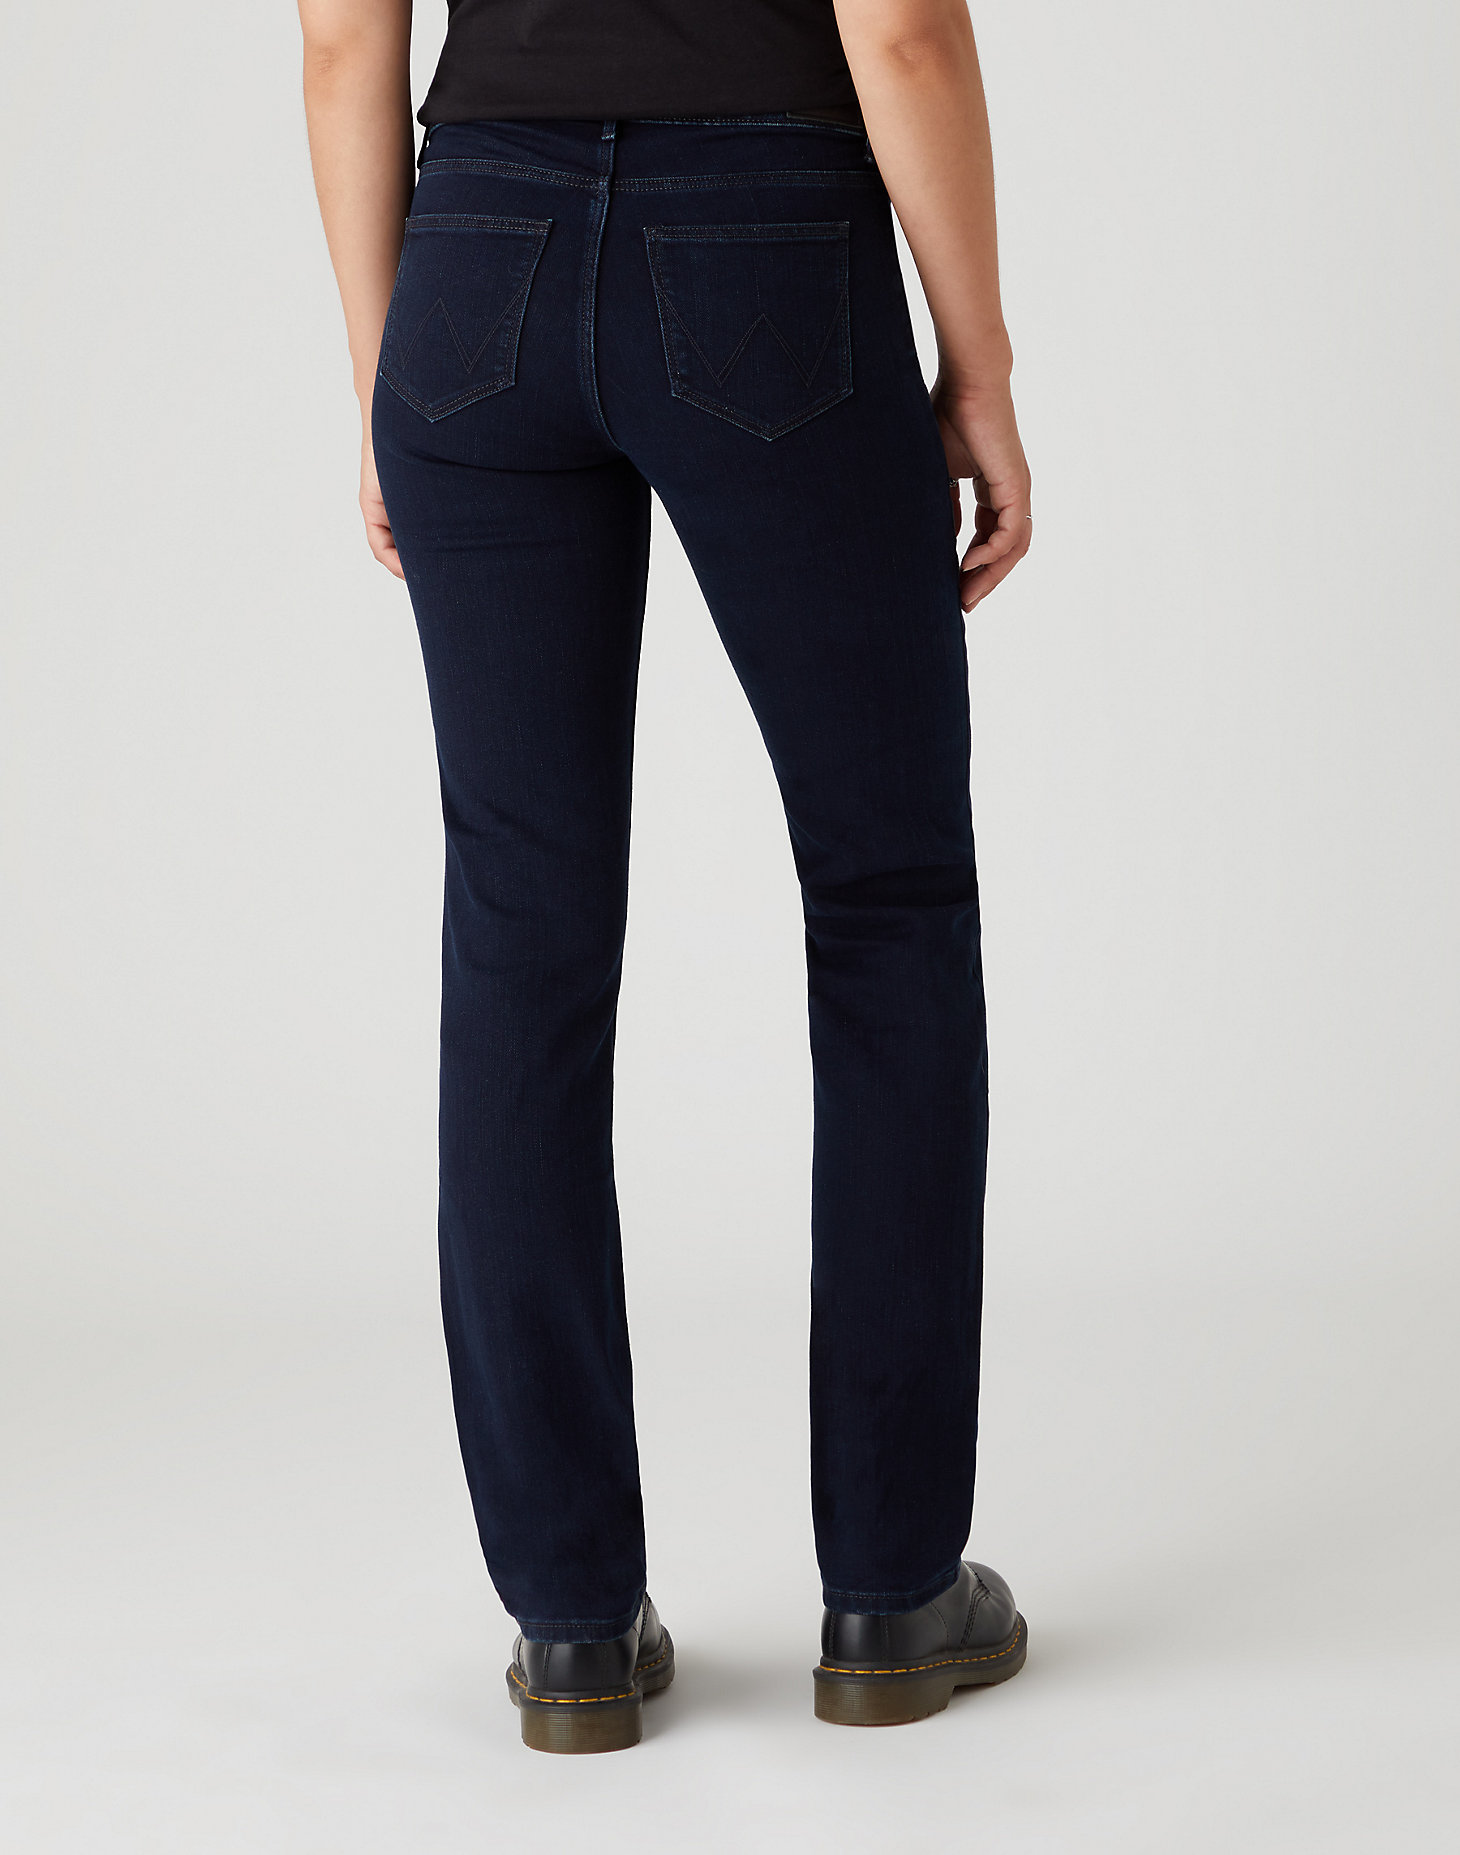 Introducir 58+ imagen jeans wrangler mujer outlet